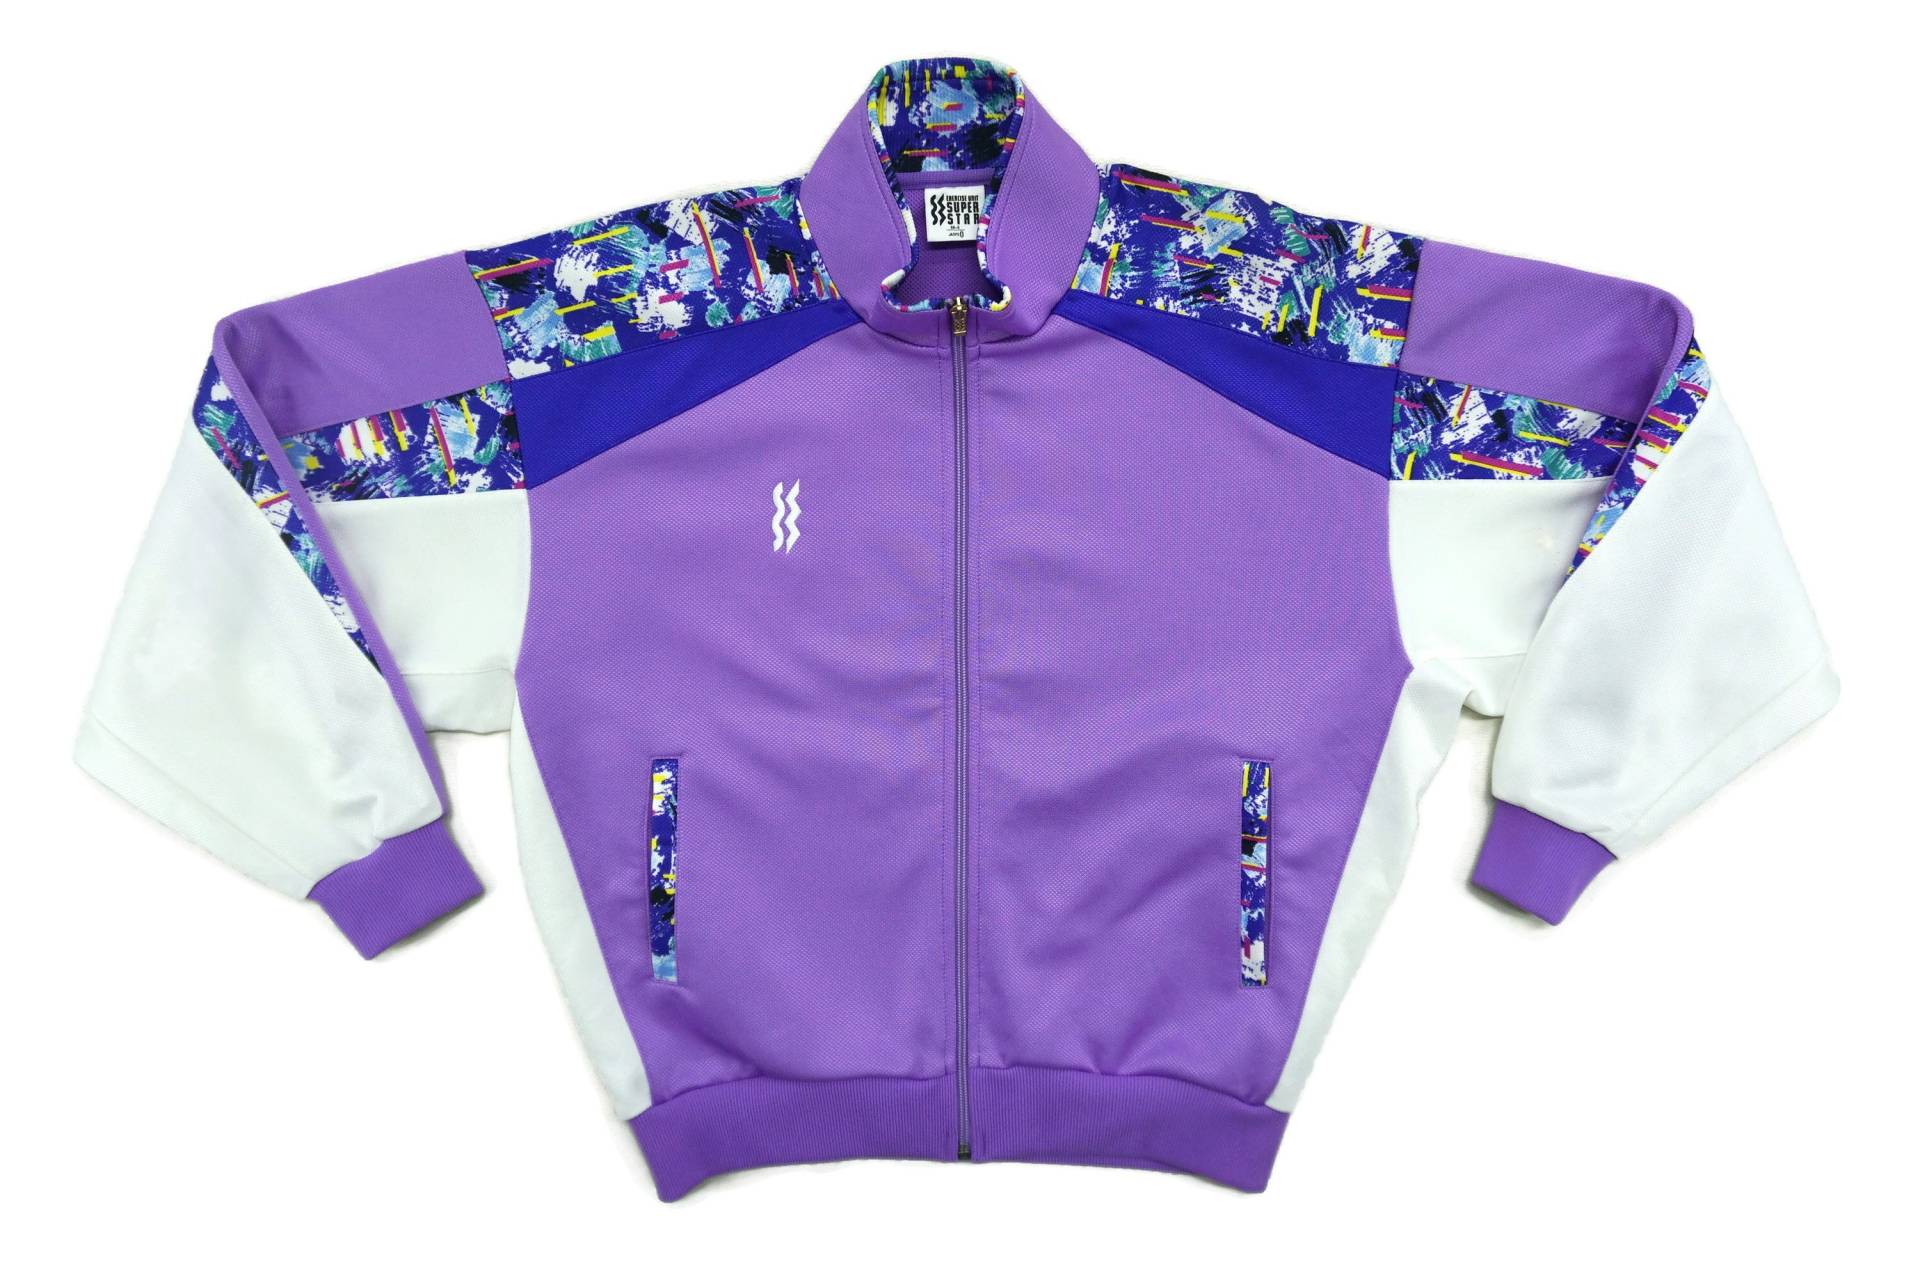 Superstar Jacke Herren Gr. M 90S Mizuno Trainingsjacke Vintage Colorblock Sportswear Multicolor Abstrakte von TinCityVintage